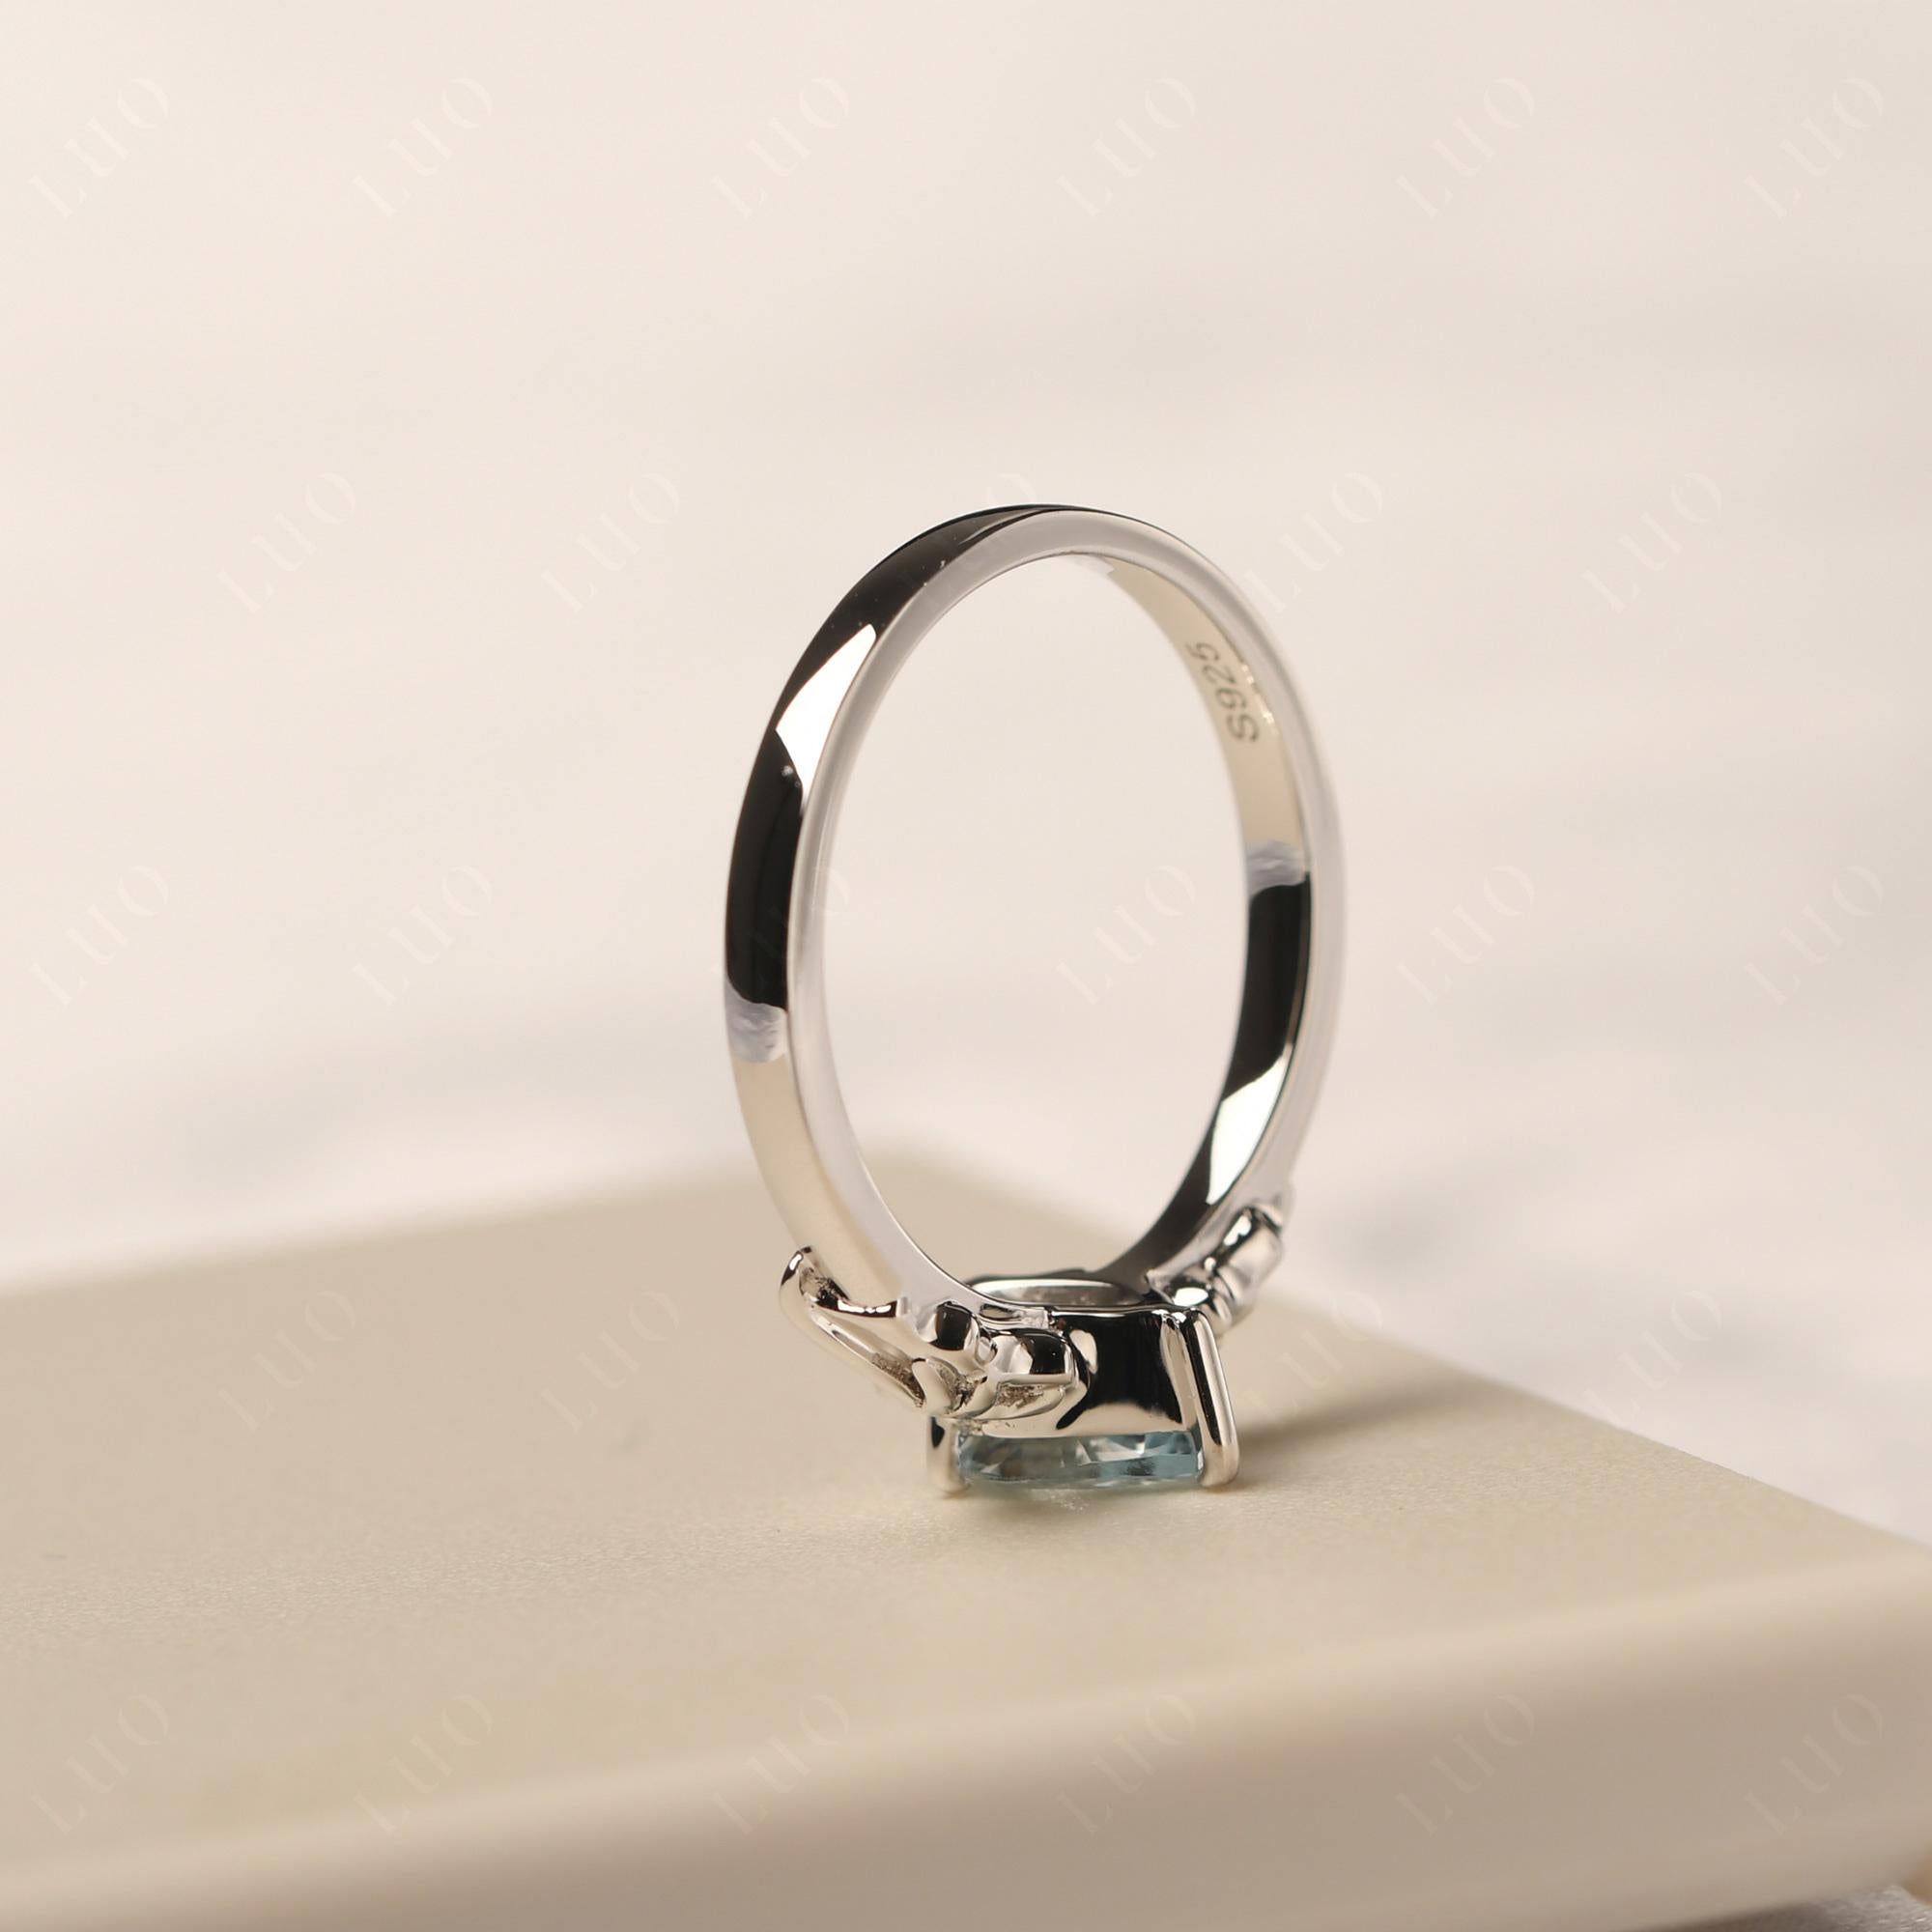 Aquamarine Bat Engagement Ring - LUO Jewelry